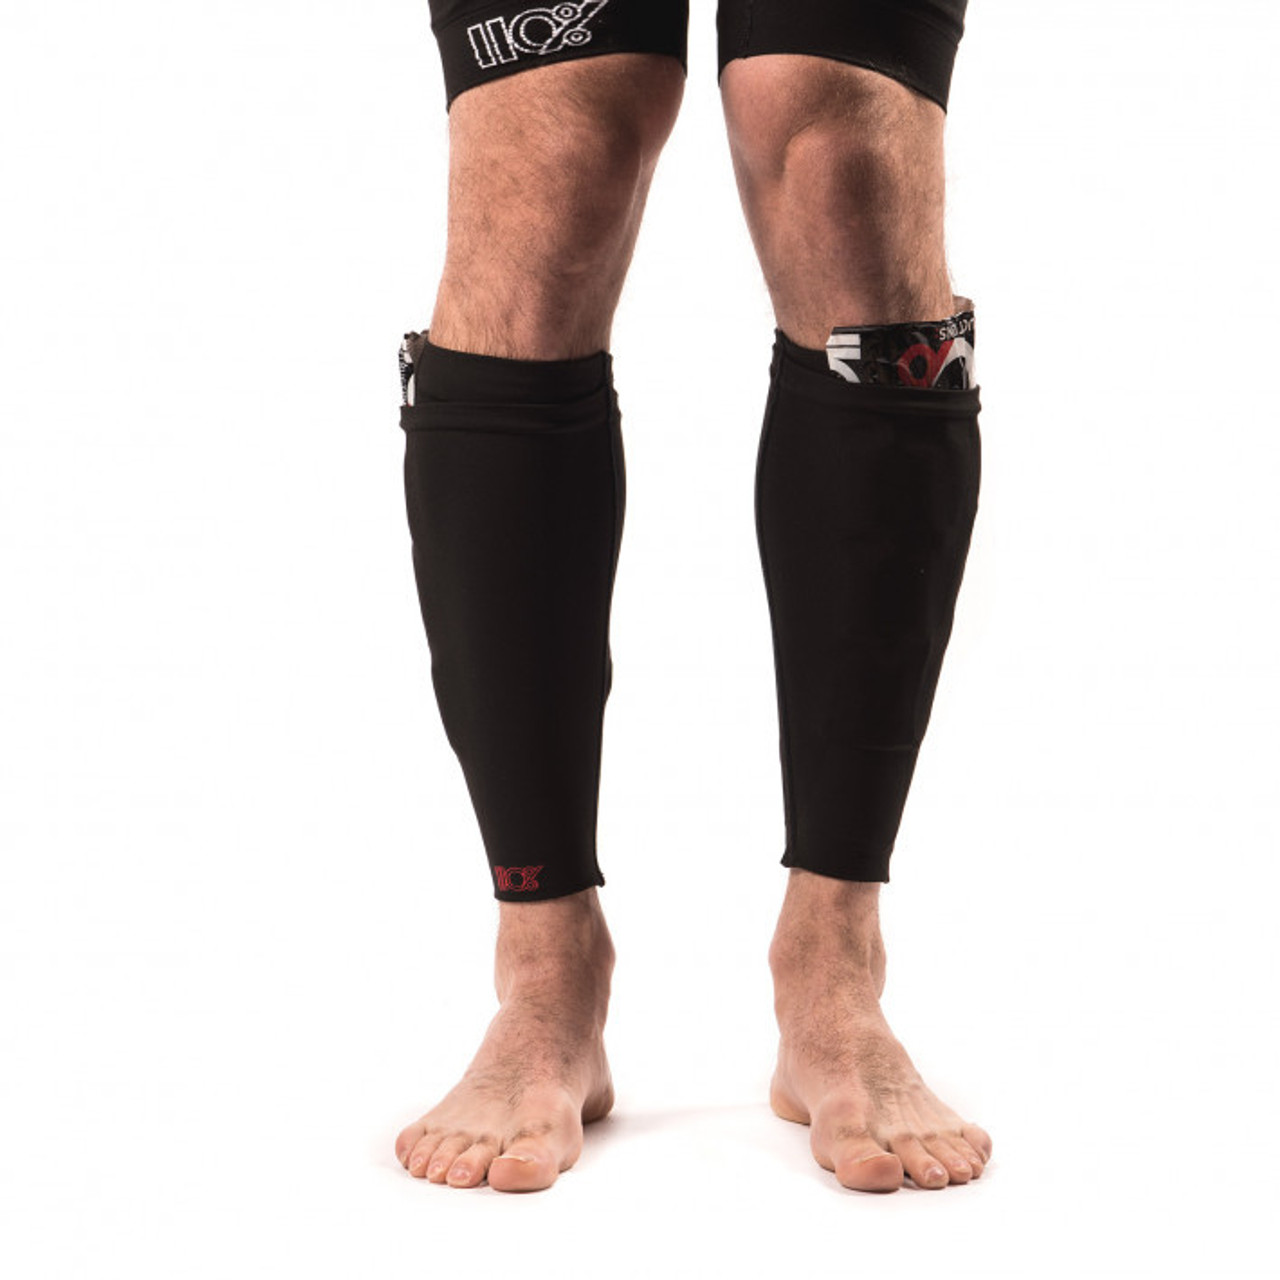  Rungear Knee Pads Compression Leg Sleeve Calf Shin